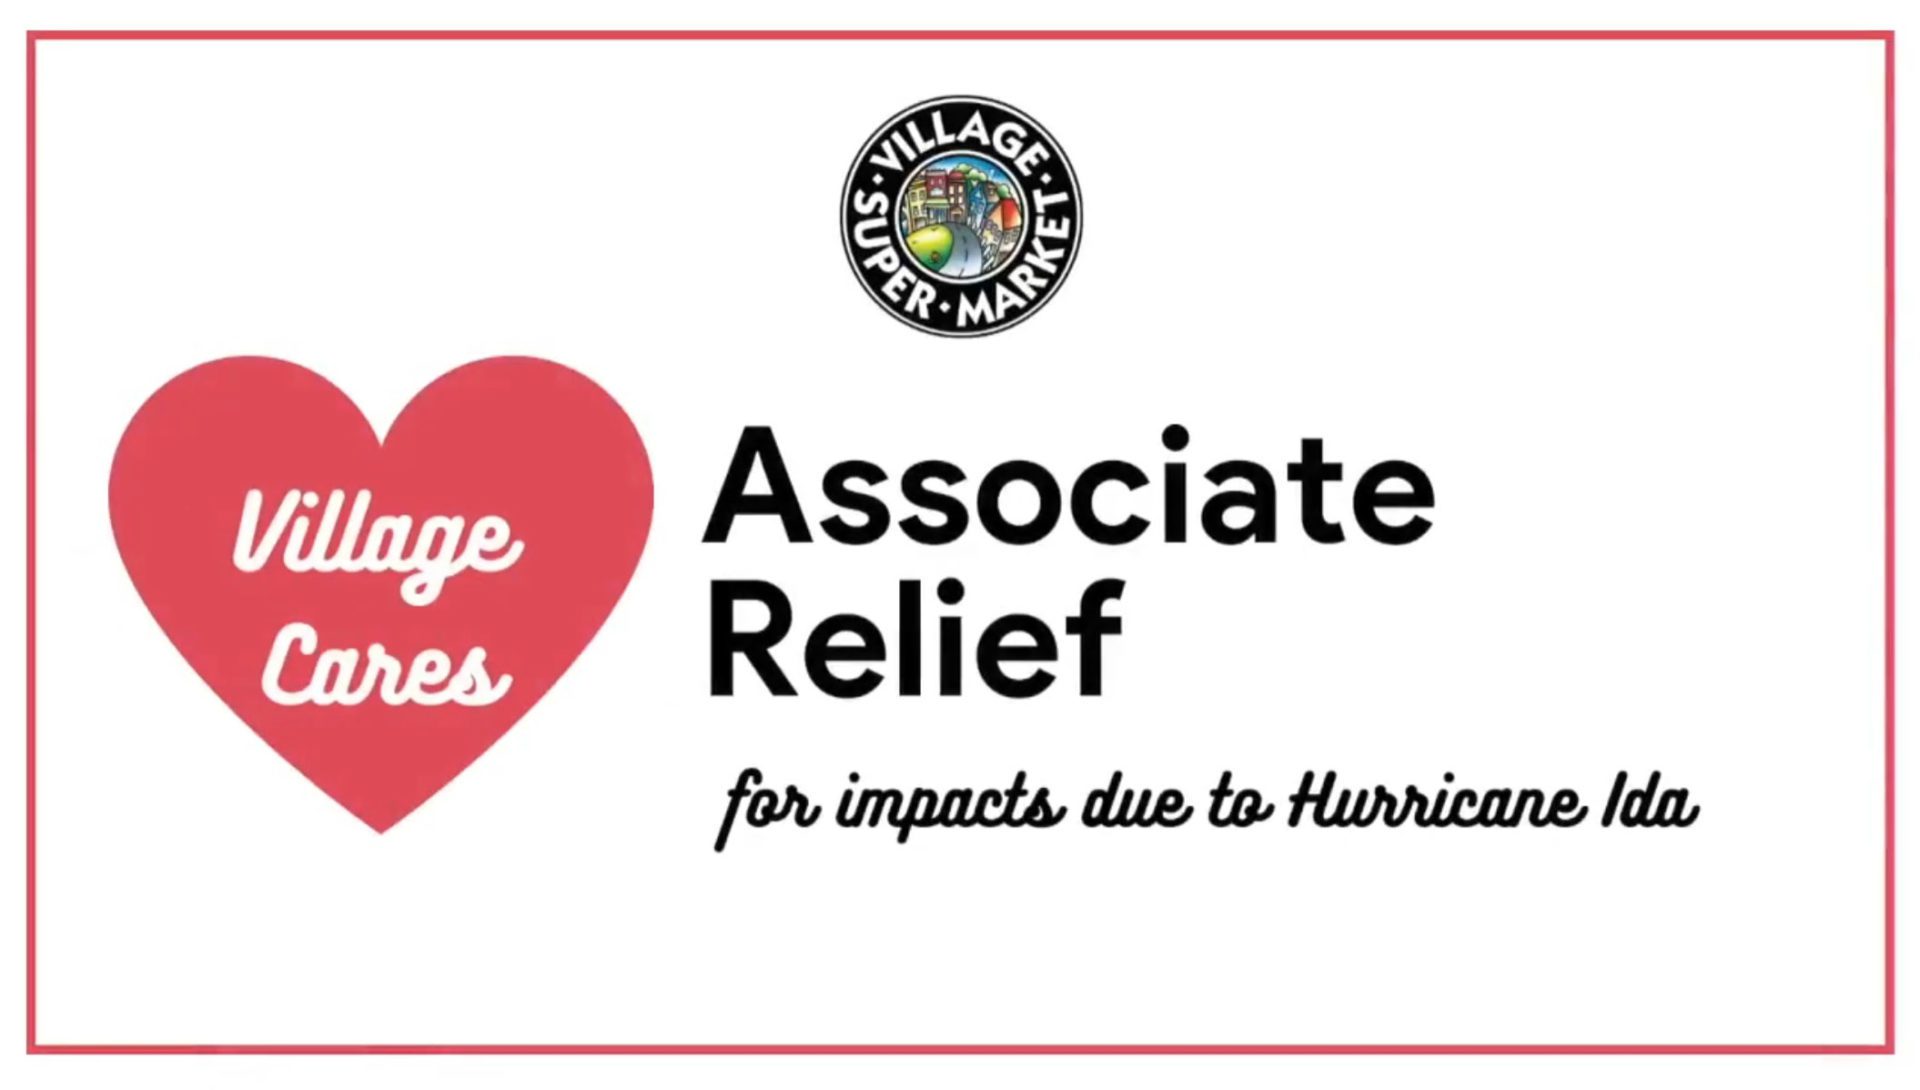 NEW! Village Cares Associate Relief Fund for Hurricane Ida